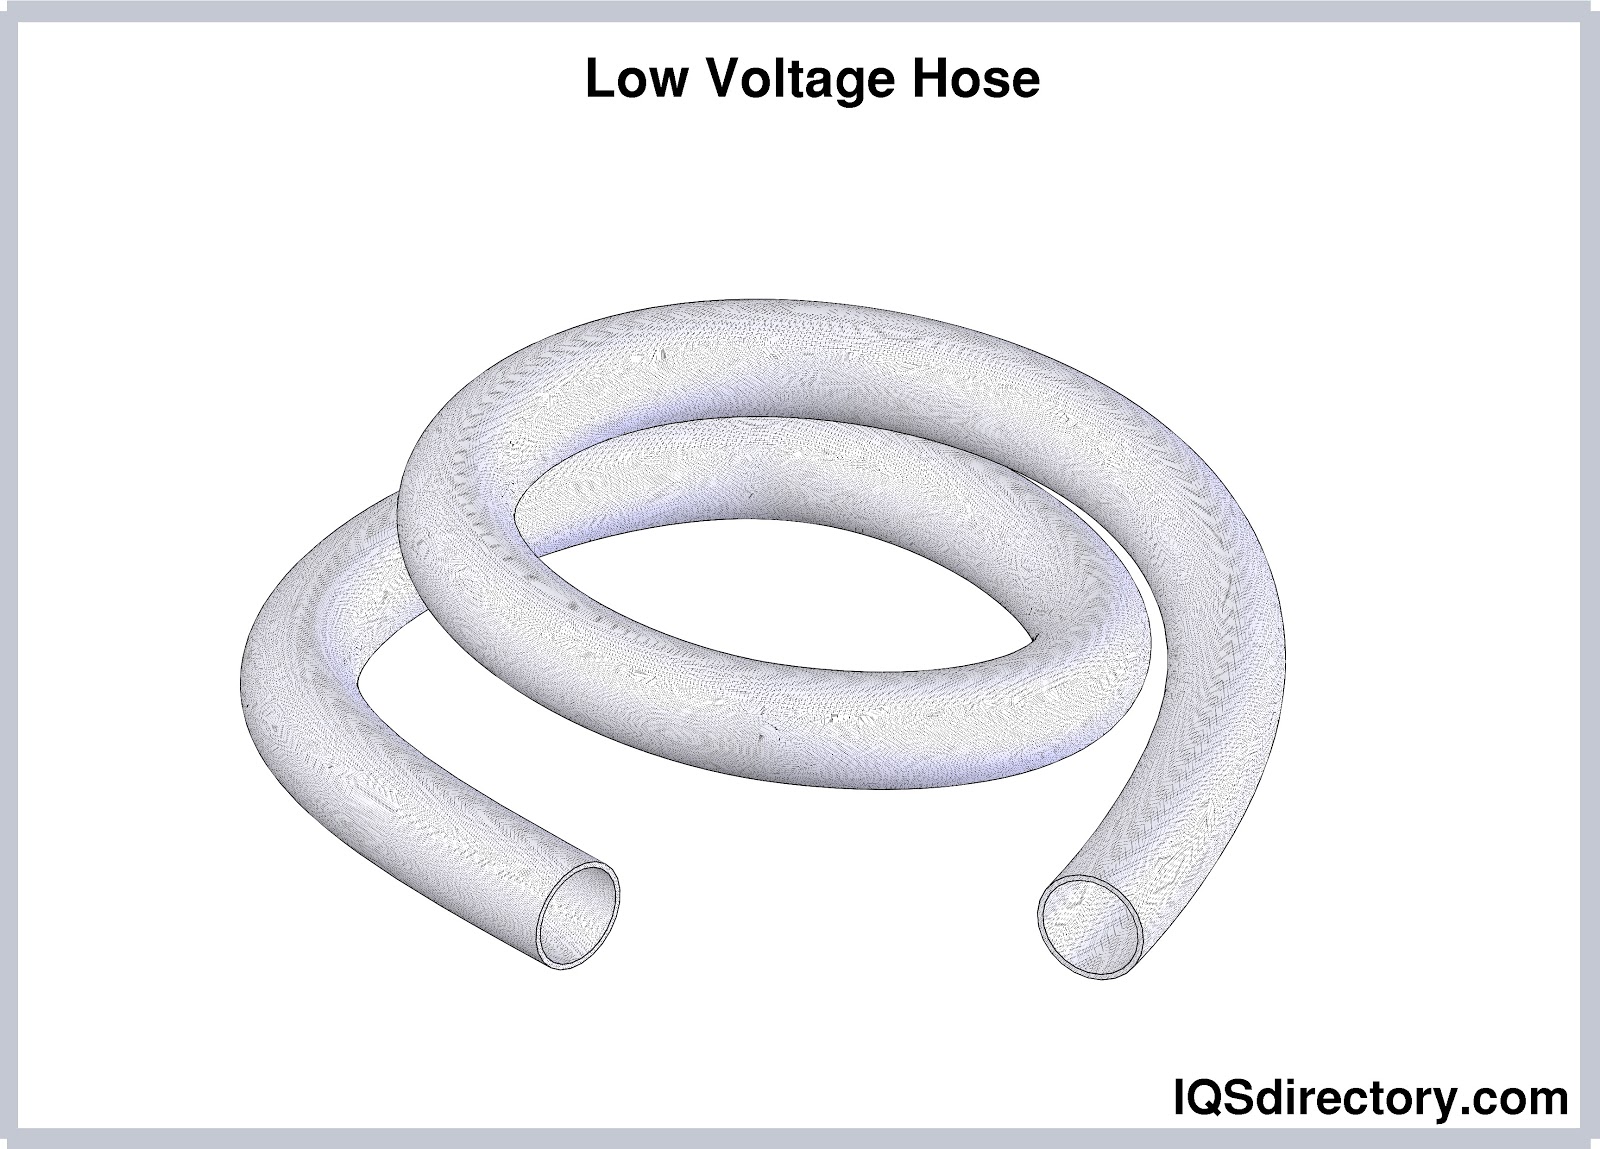 Low Voltage Hose